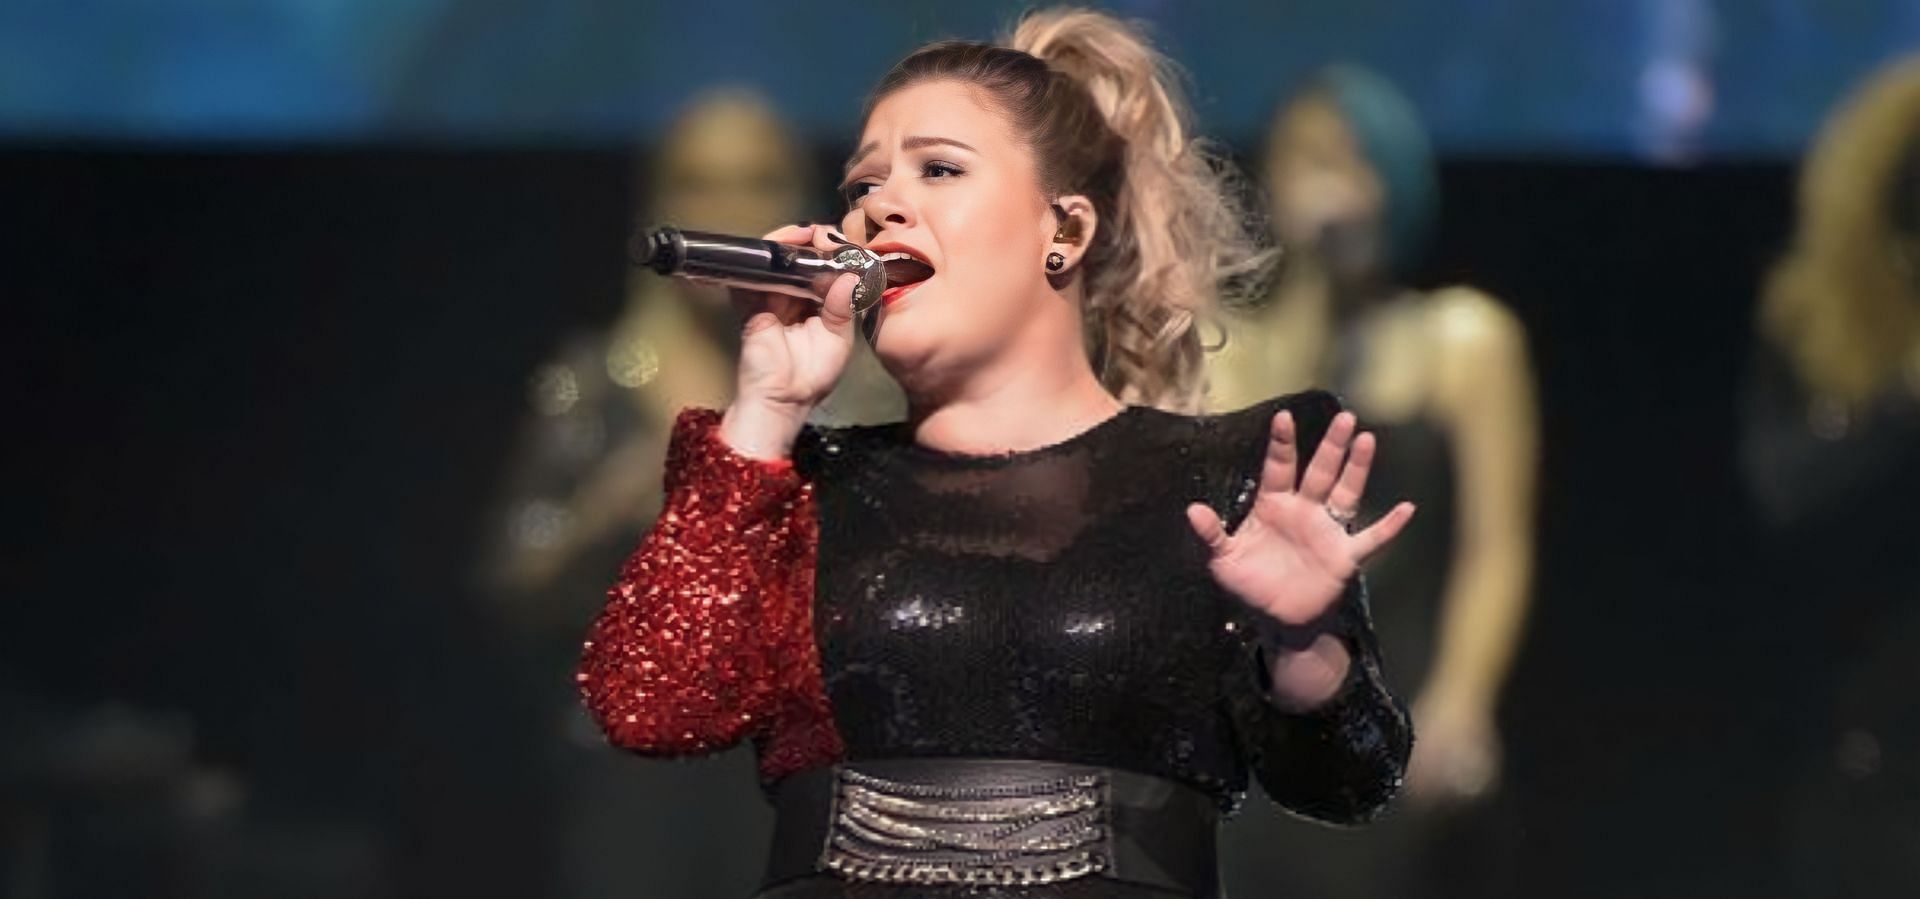 Kelly Clarkson Las Vegas Residency 2023 Tickets, where to buy, dates